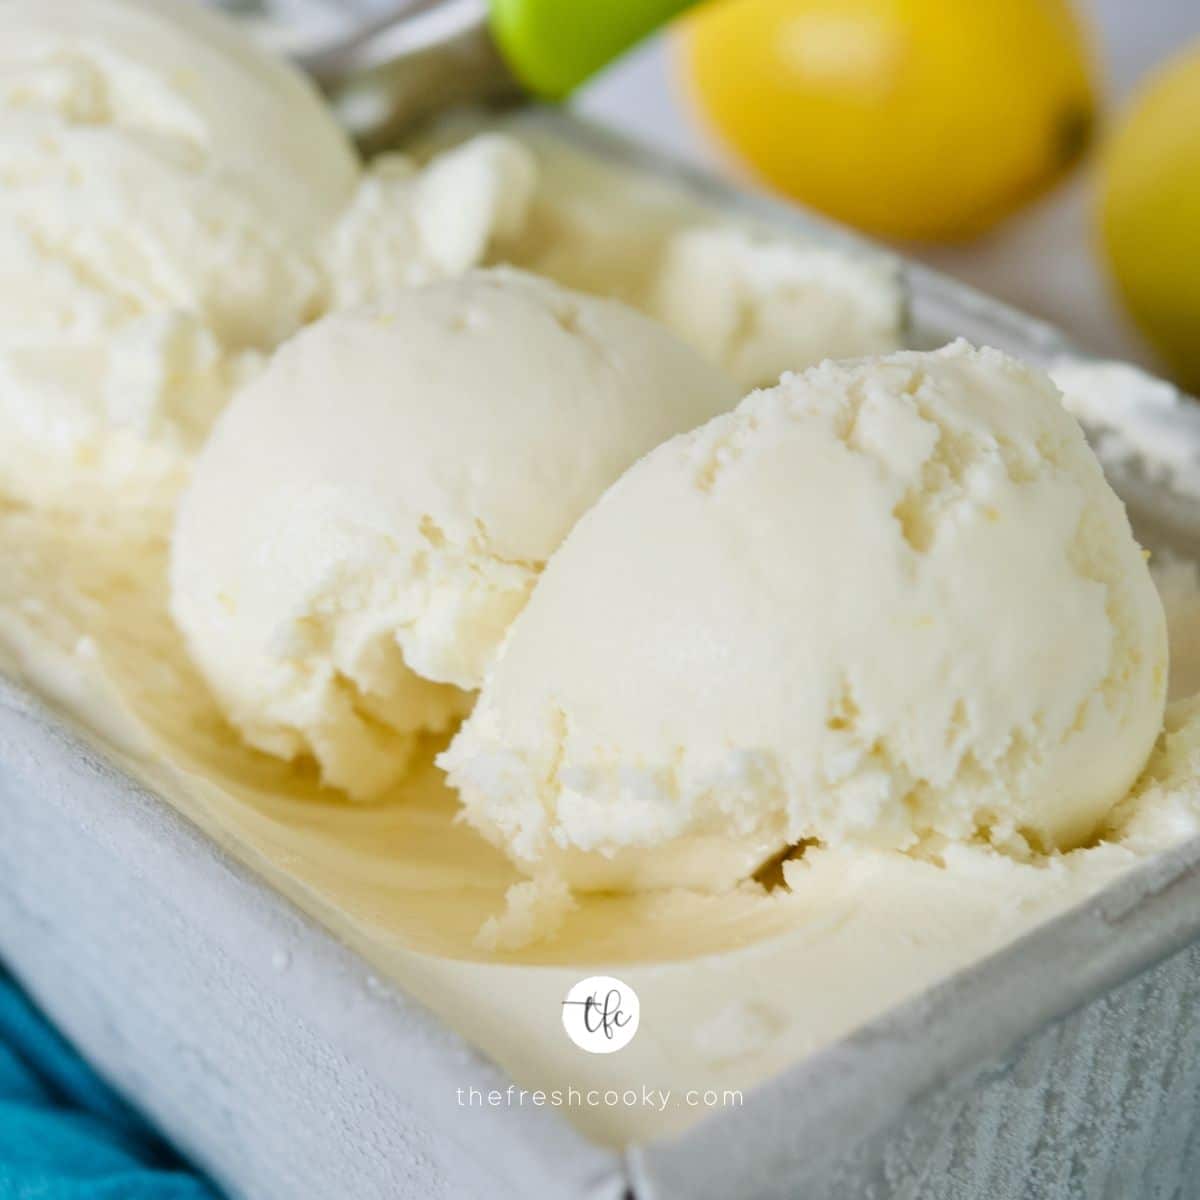 https://www.thefreshcooky.com/wp-content/uploads/2021/07/lemon-ice-cream-square-2.jpg